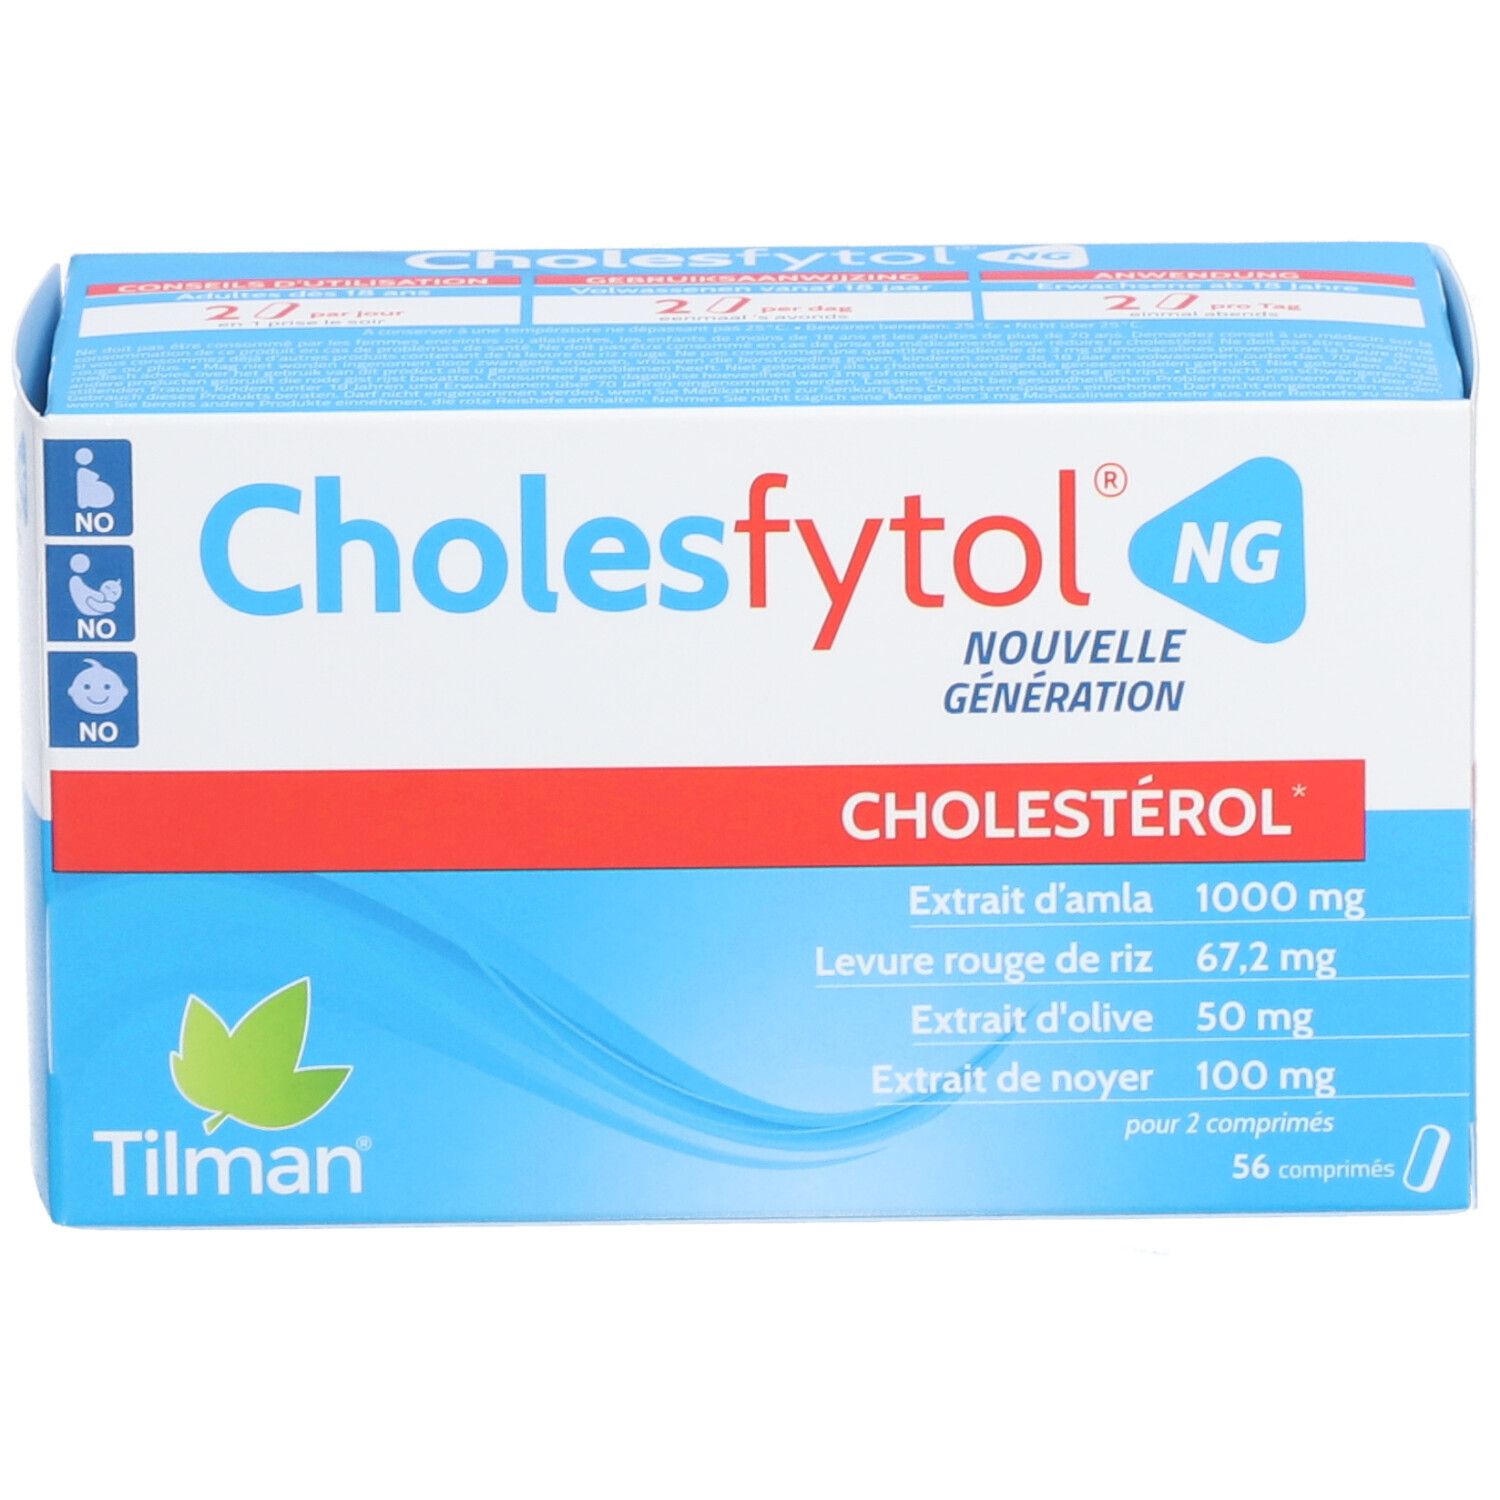 Tilman® Cholesfytol® NG